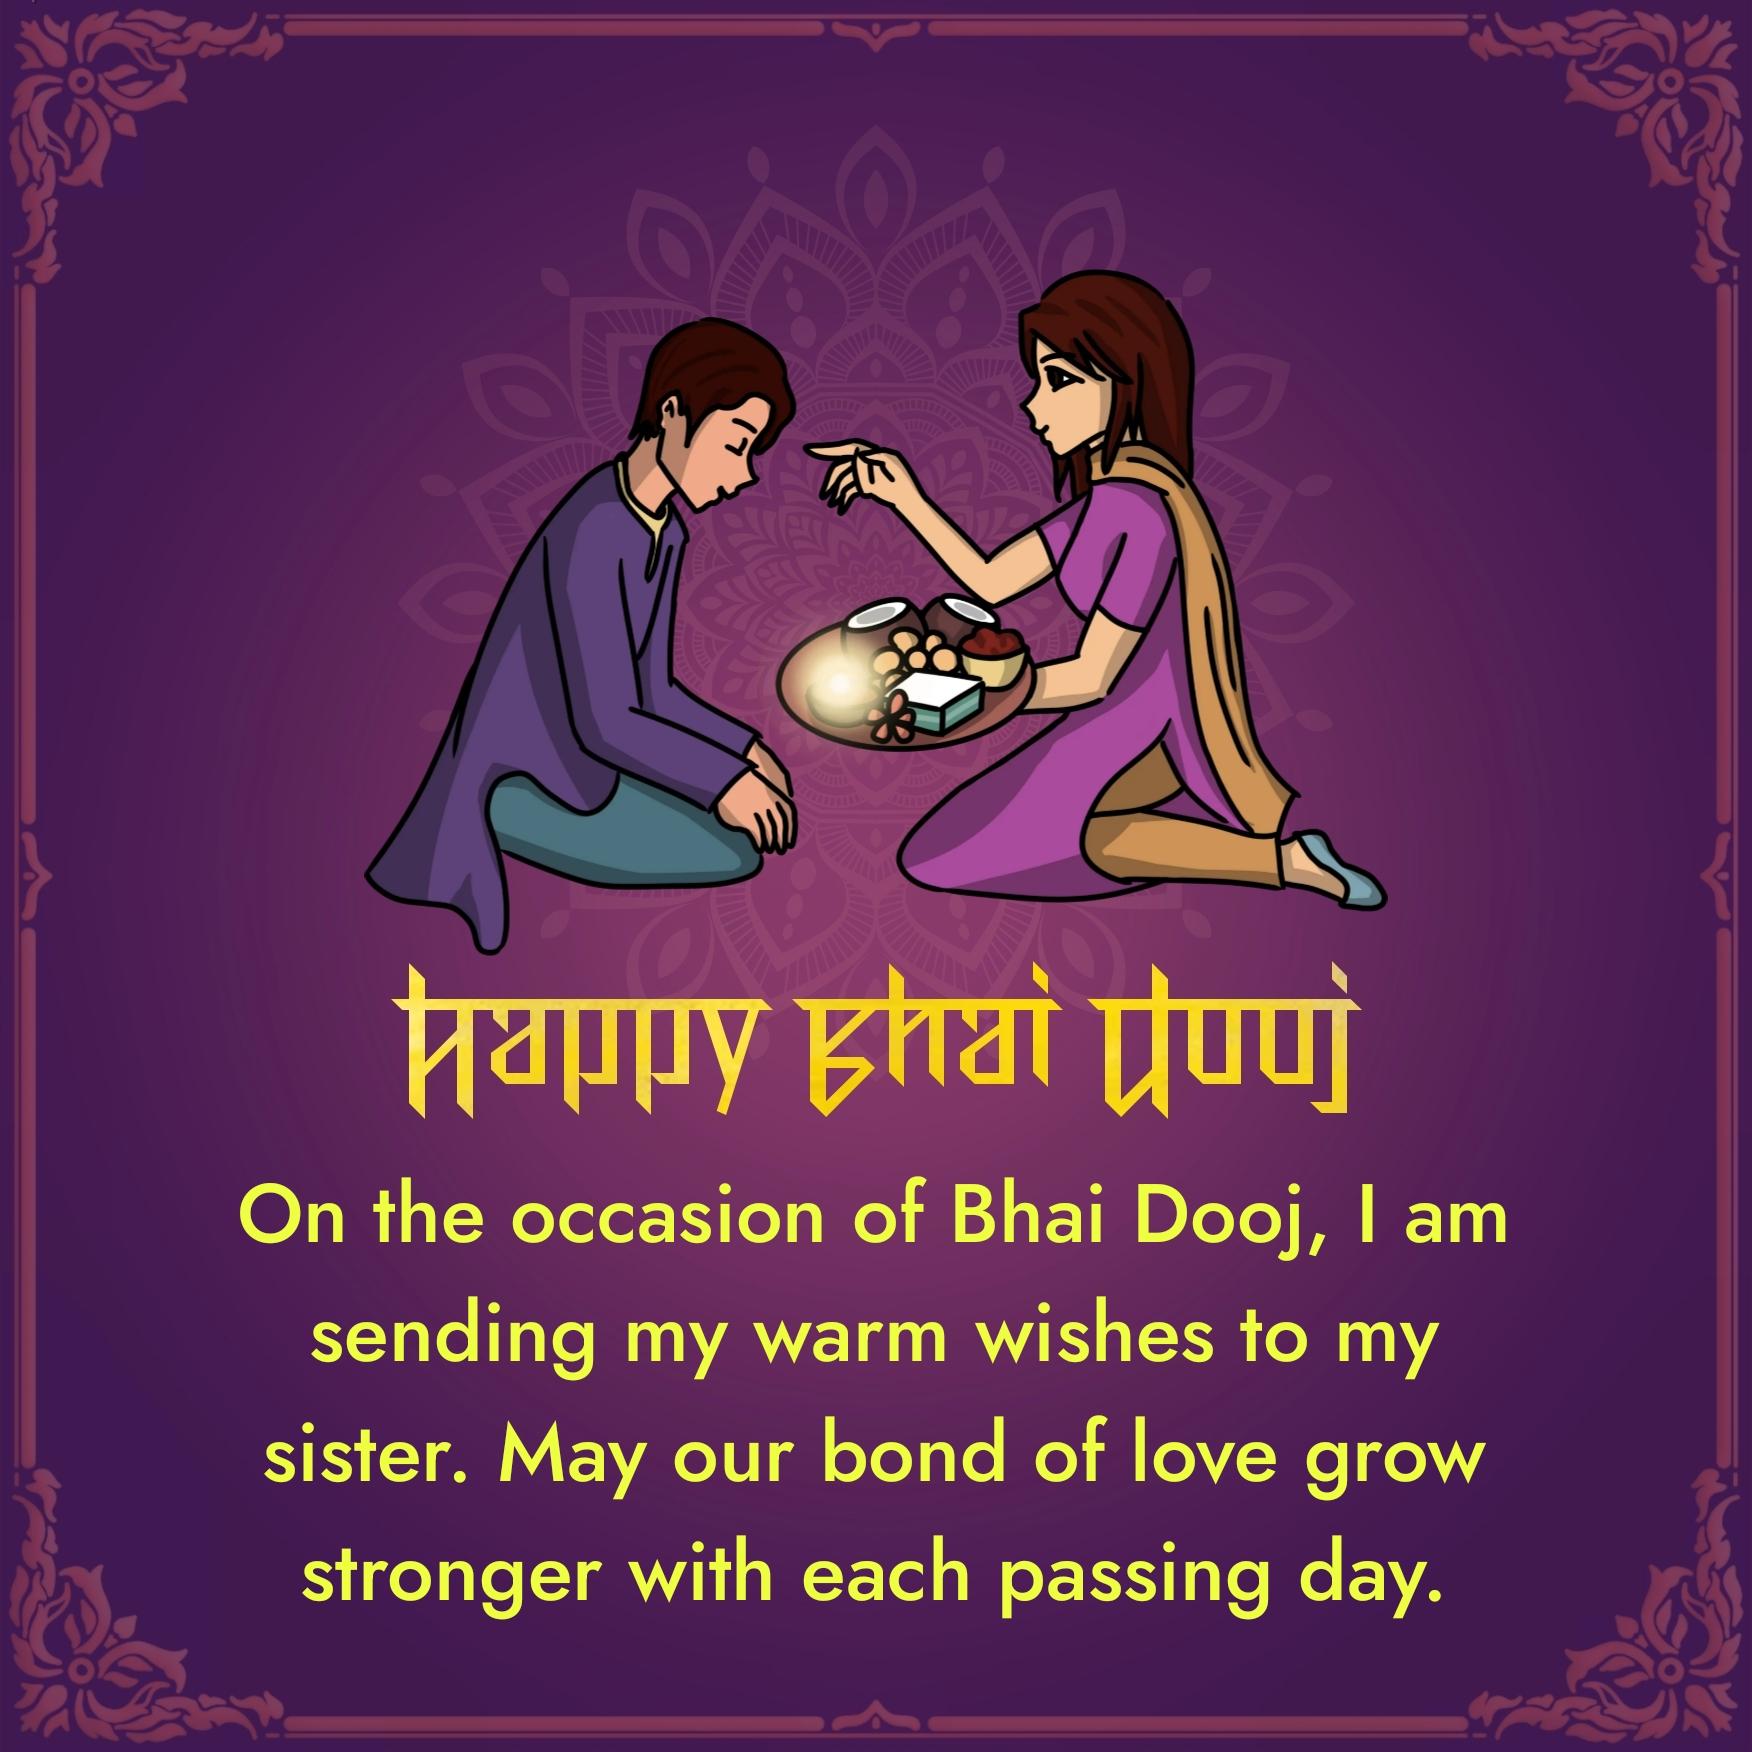 On the occasion of Bhai Dooj I am sending my warm wishes